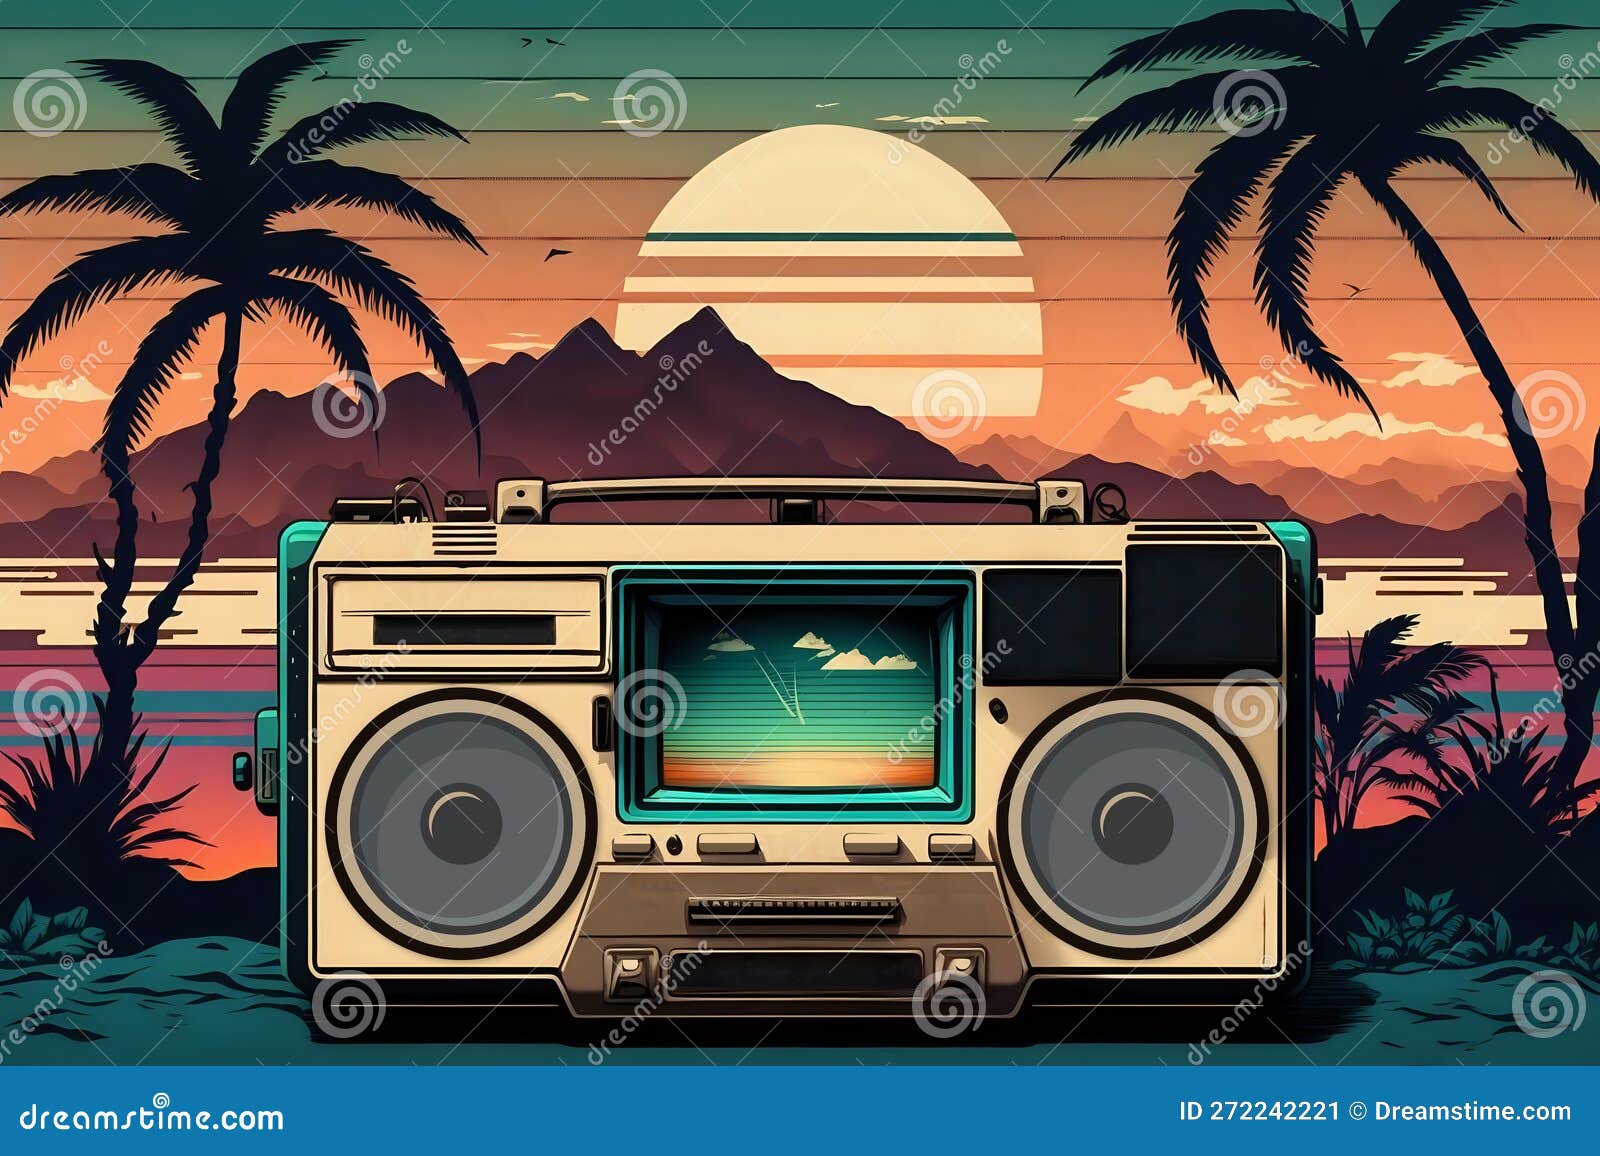 Background Retro Radio 80s stock illustration. Illustration of